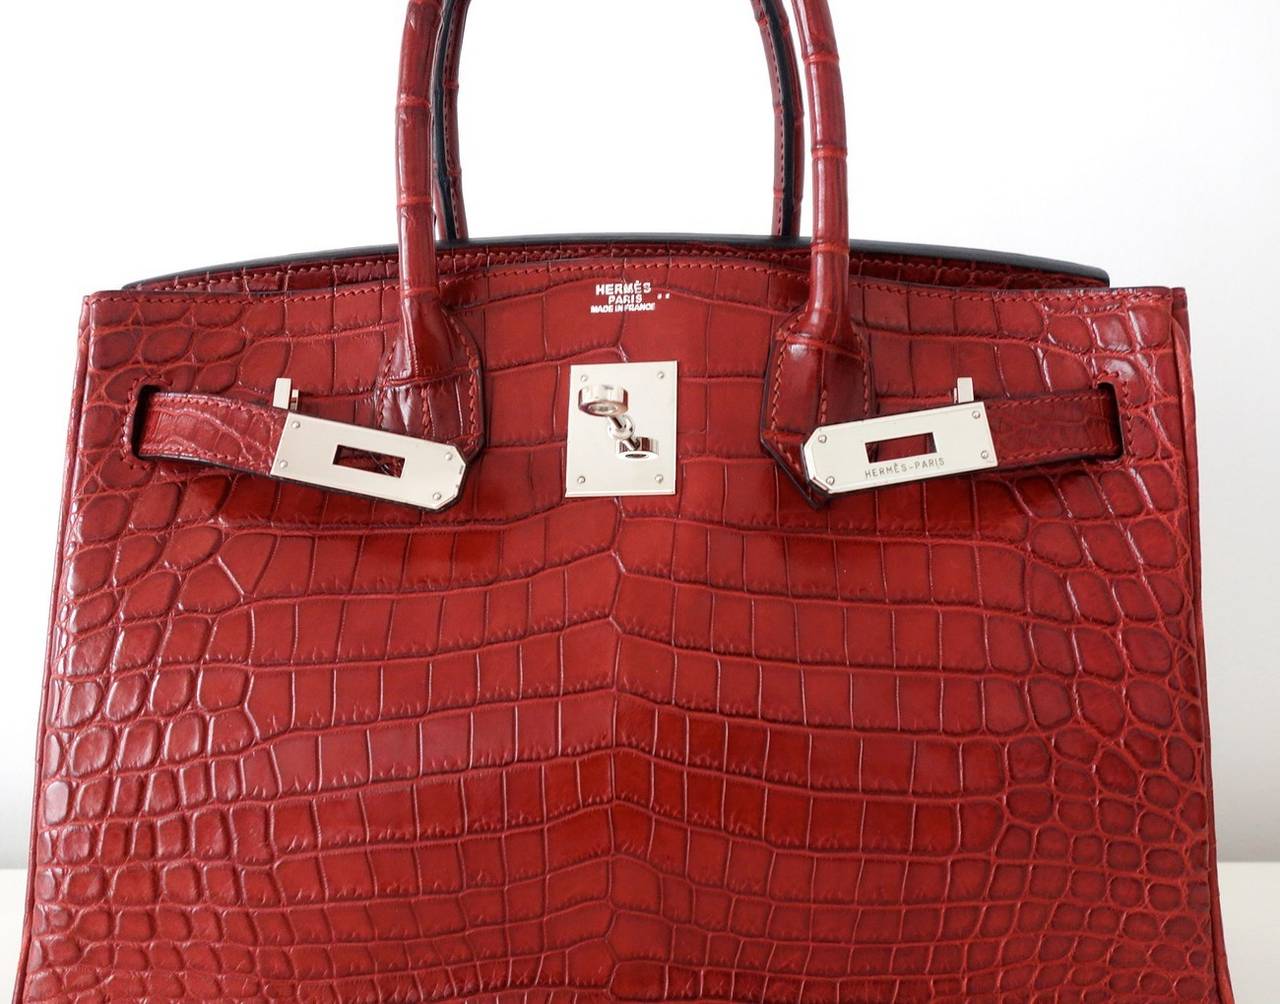 Authentic Hermes Birkin 30 Handbag Rouge H Crocodile Niloticus RARE For Sale at 1stdibs